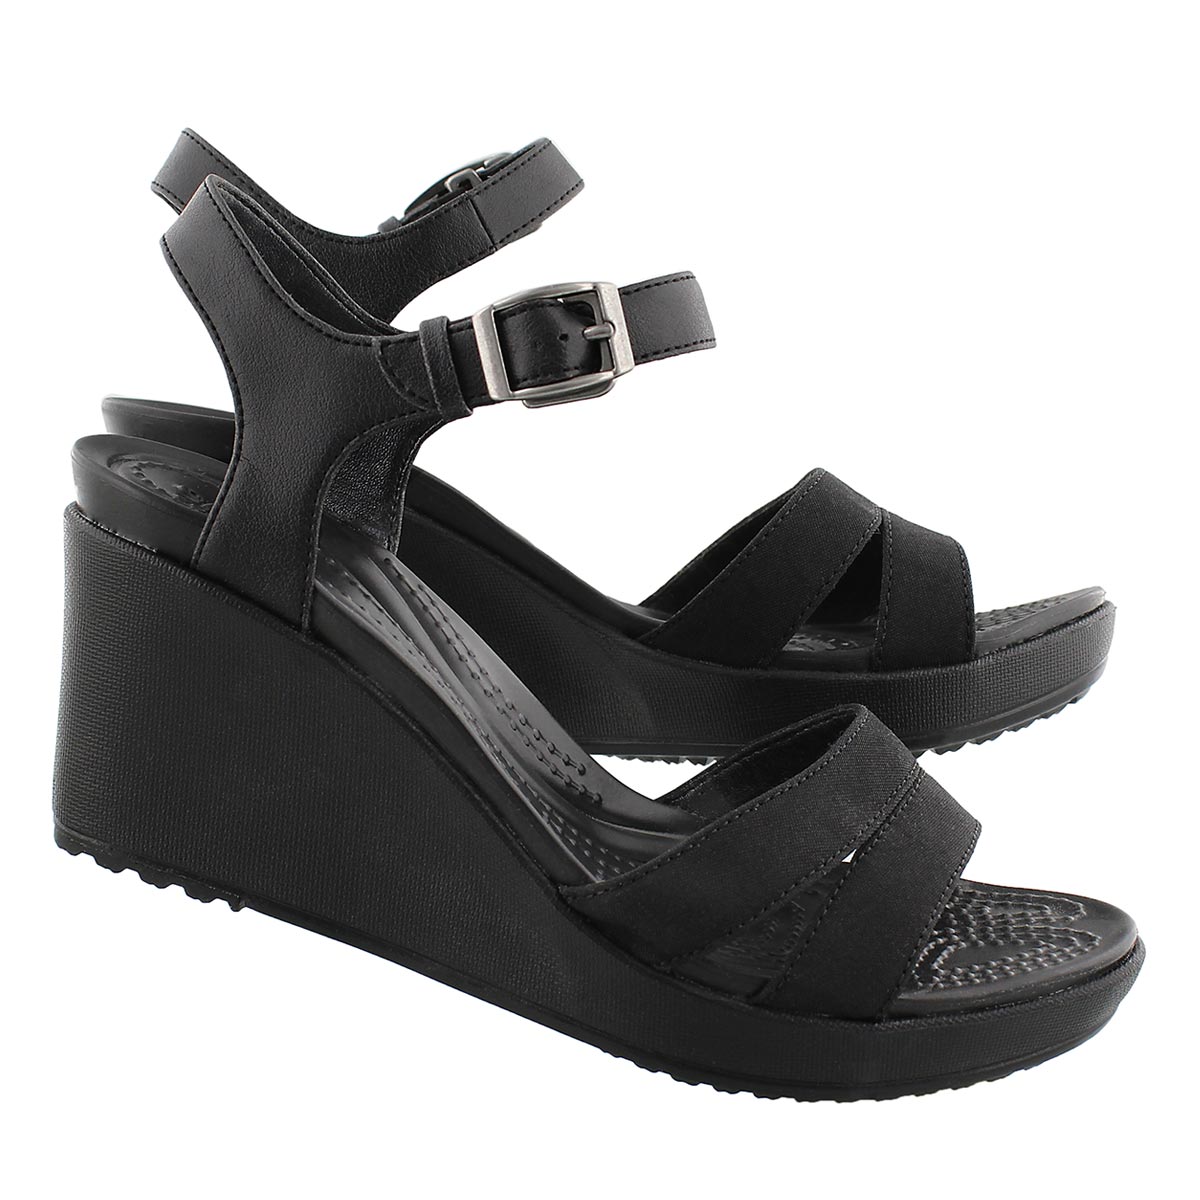 Crocs Women's Leigh II Ankle Strap Wedge Sandal | eBay